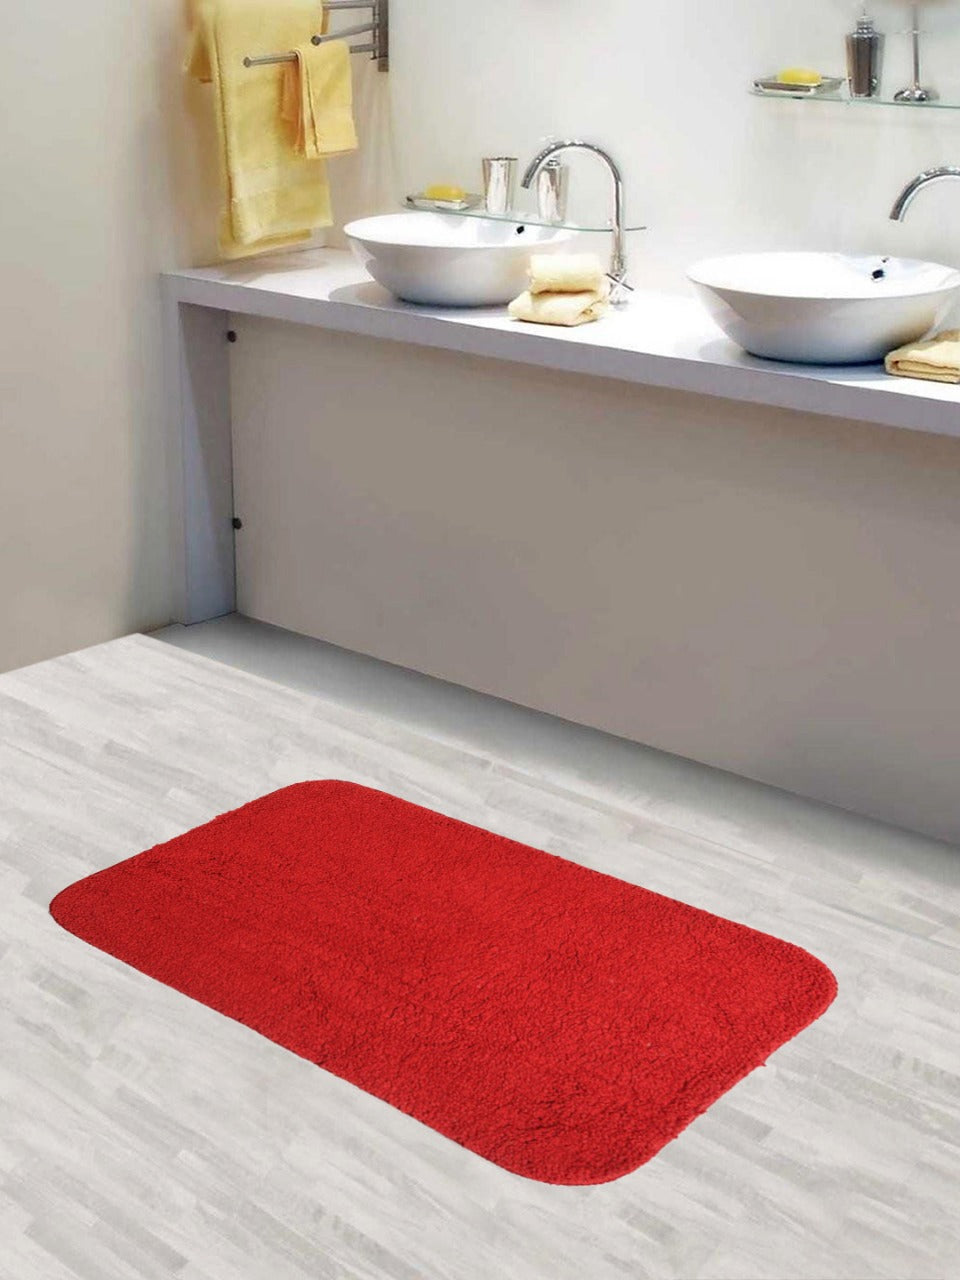 Lushomes Bathroom Mat, floor mats for home, anti slip mat, non slip mat 1800 GSM Floor Mat with High Pile Microfiber, anti skid mat for bathroom floor (15 x 24 Inch, Single Pc, Maroon)